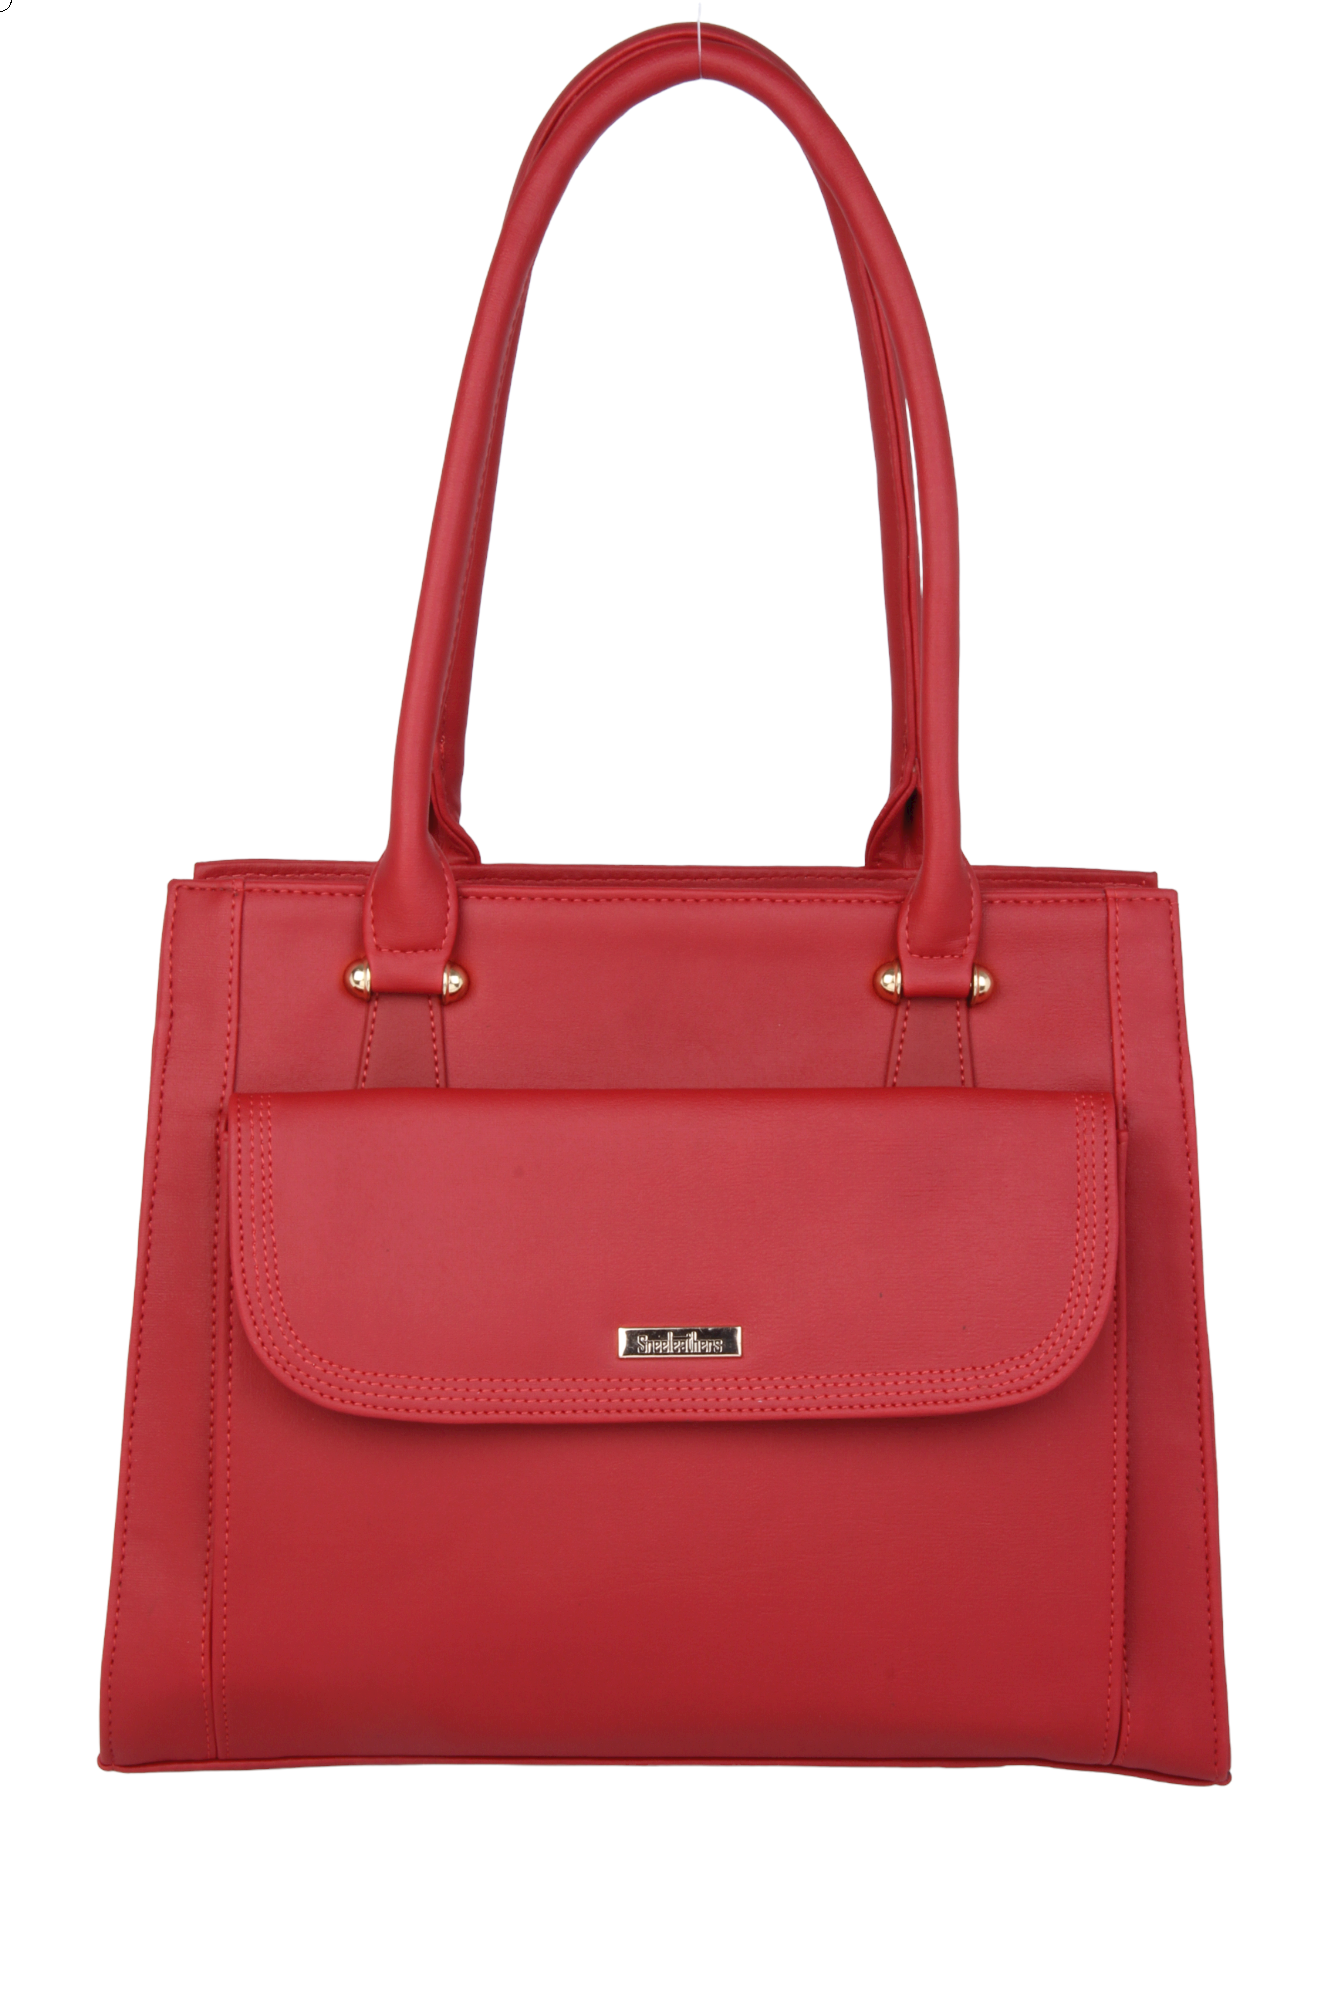 Concept Bags & Handbags for Women for sale | eBay